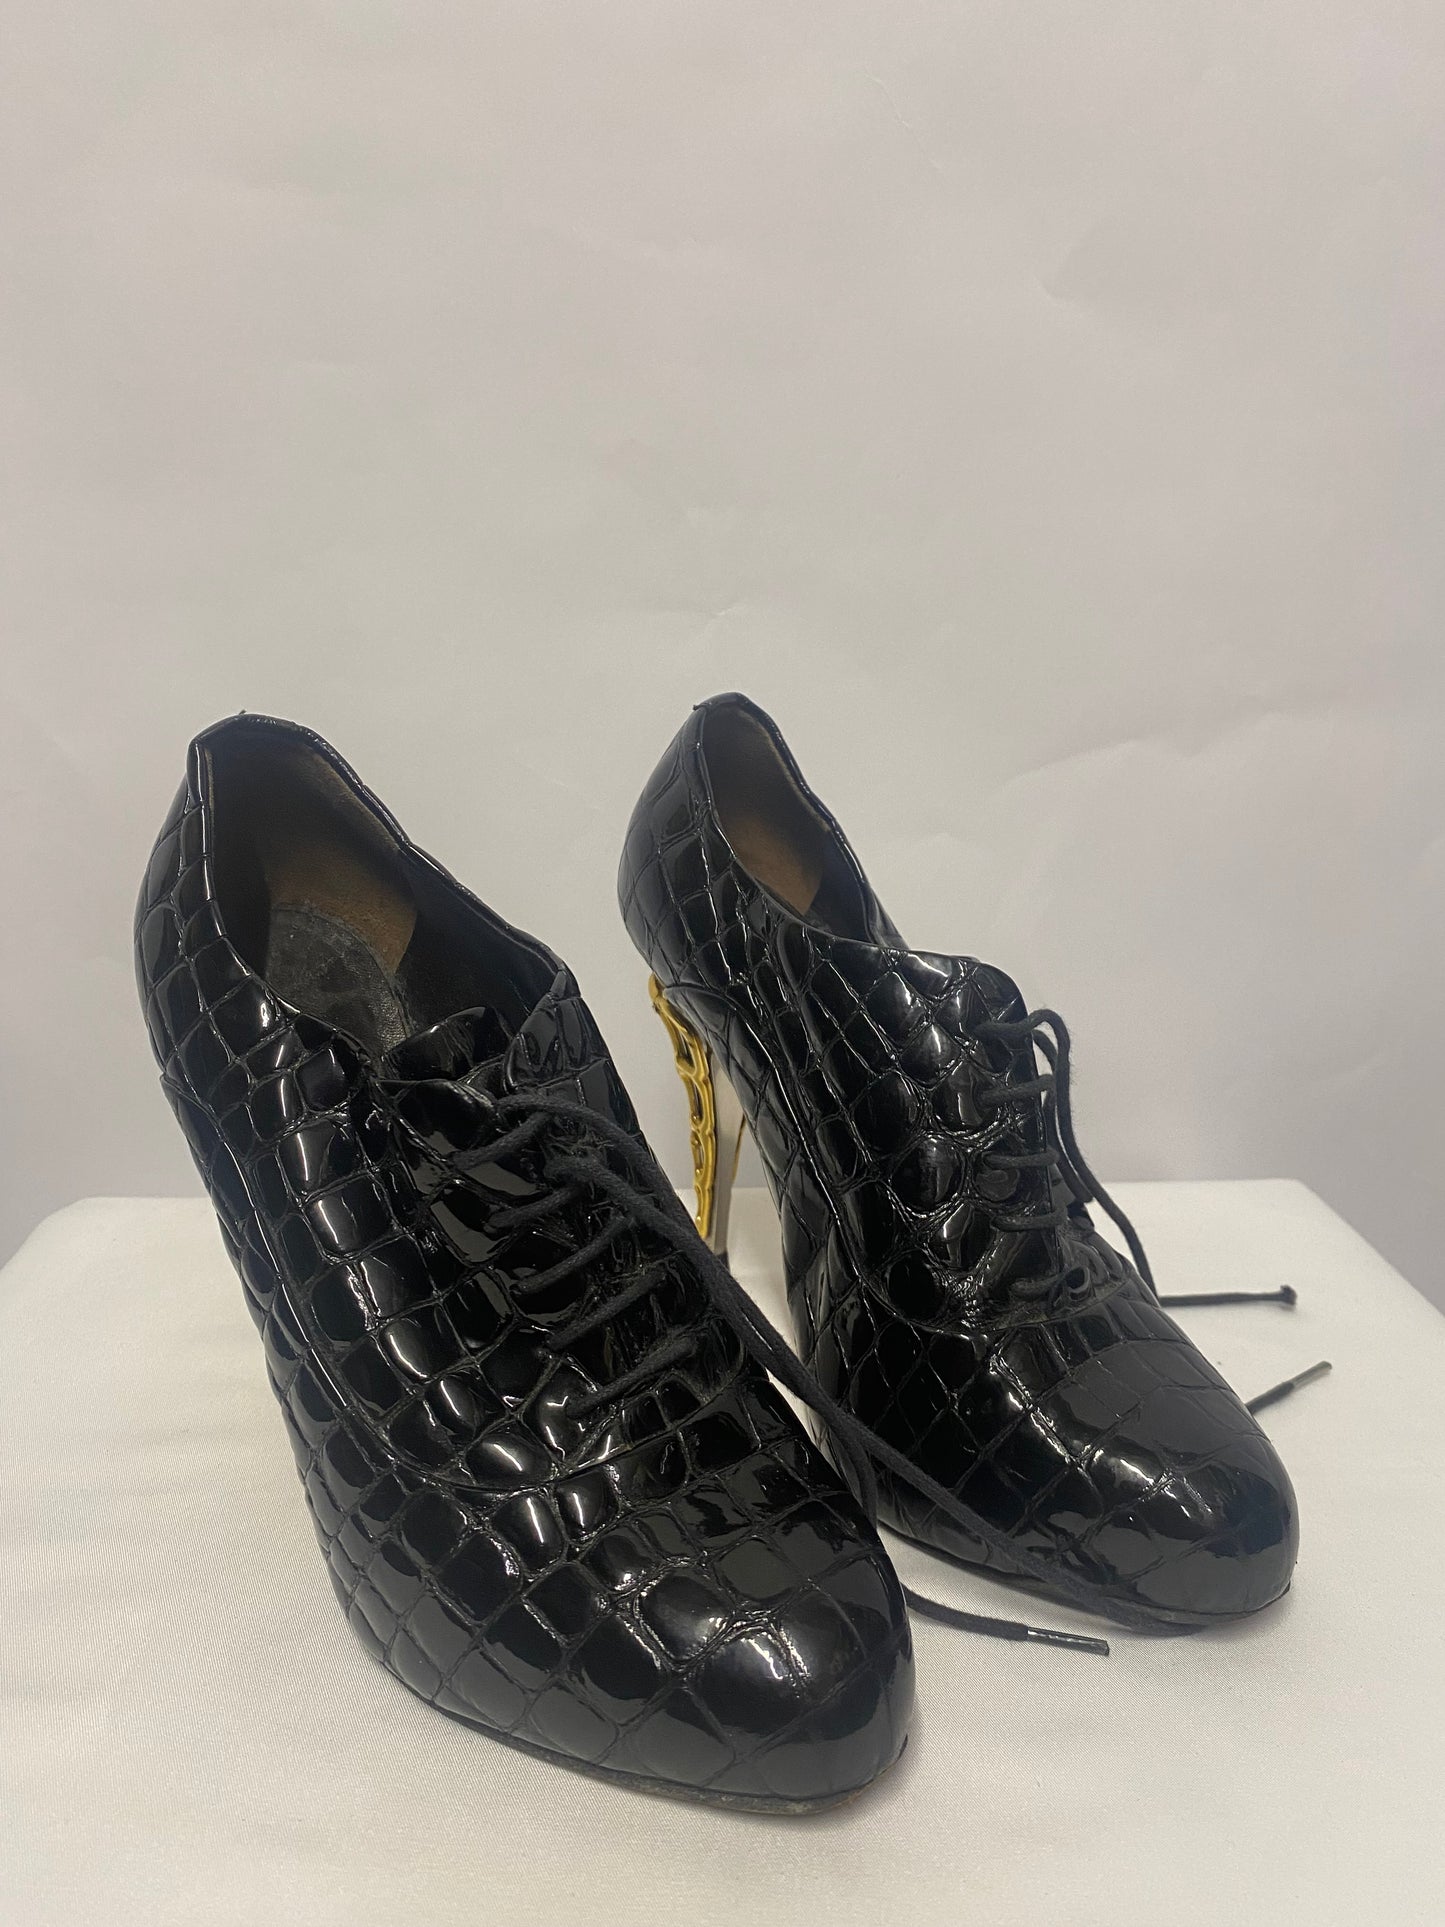 Giuseppe Zanotti Black Patent Croc Effect Caged Heels 4.5